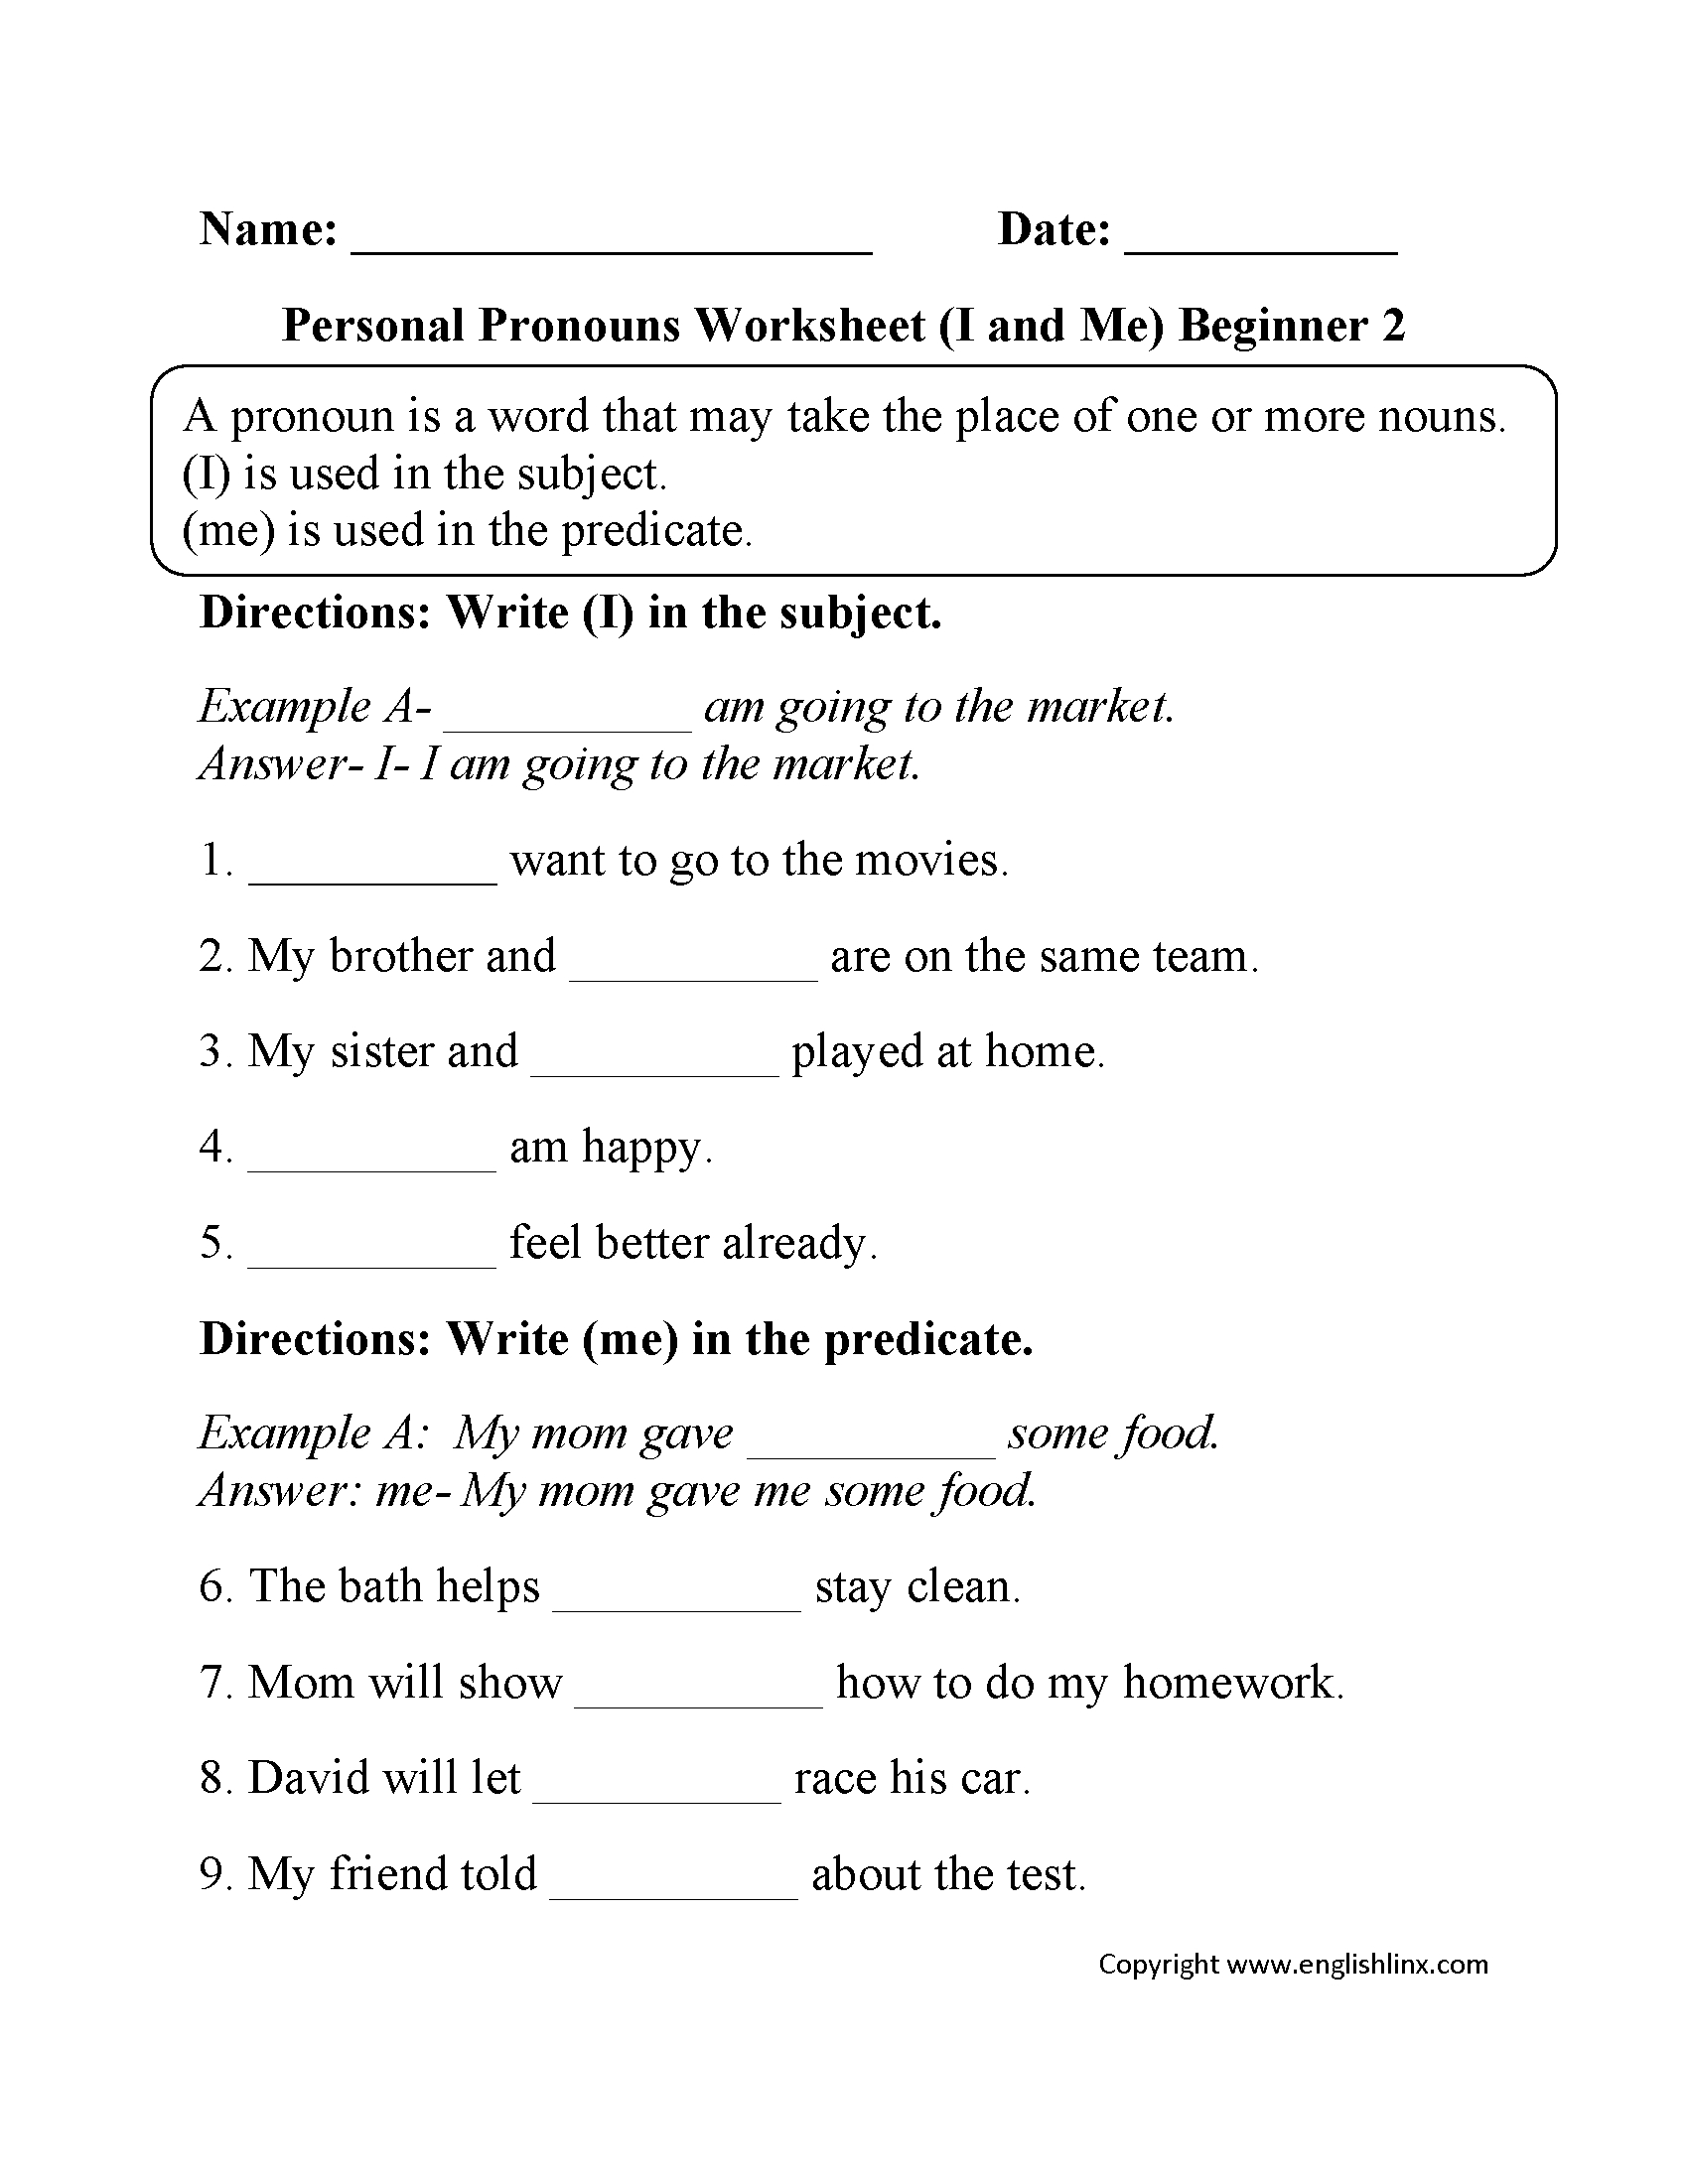 Pronouns Worksheets | Personal Pronouns Worksheets - Free Printable Pronoun Worksheets For 2Nd Grade